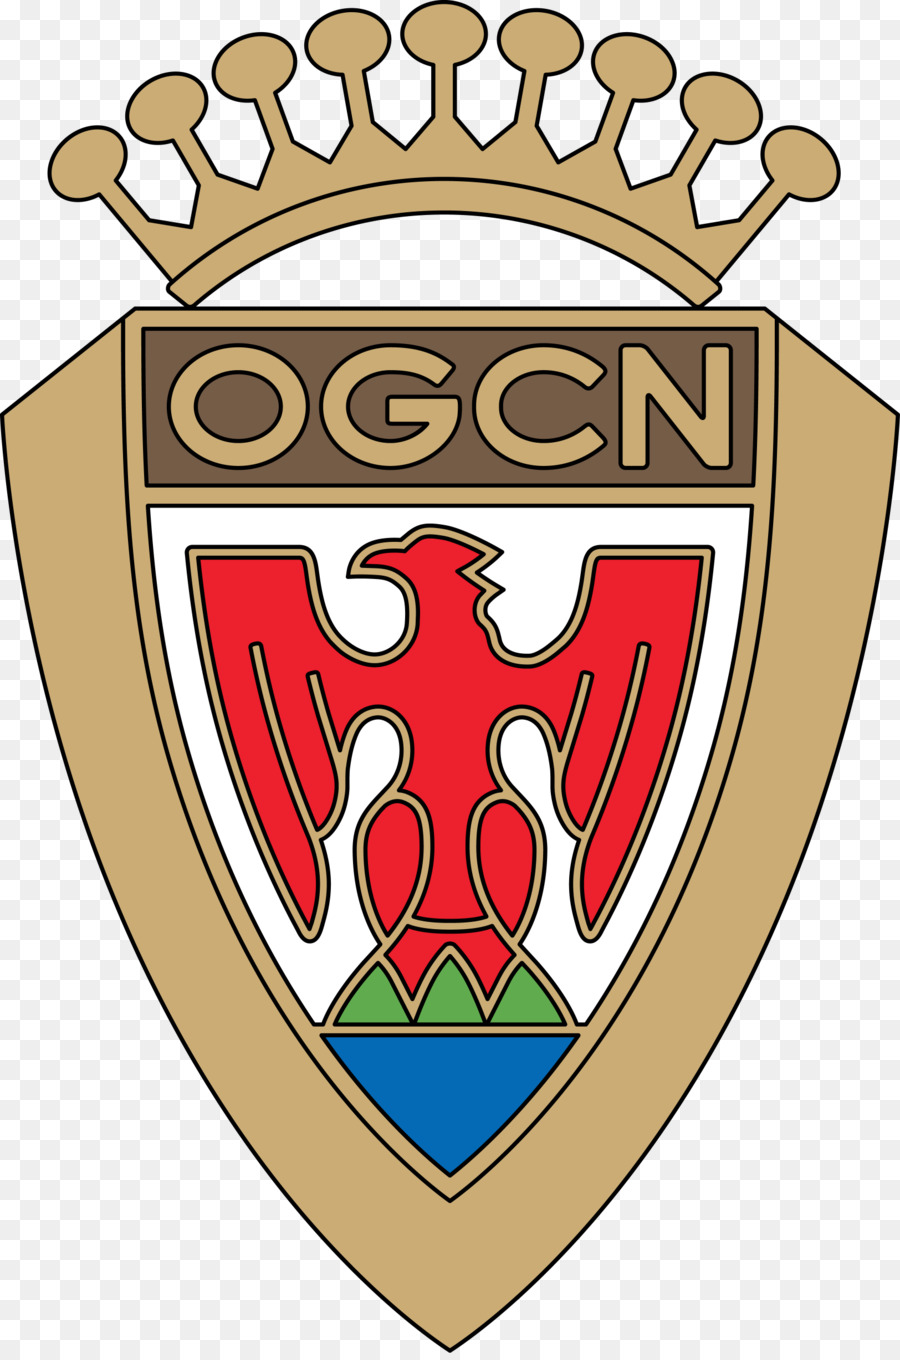 OGC Nice Logo Vektorgrafiken Stade du Ray Encapsulated PostScript - richmond football club logo png richmondfc